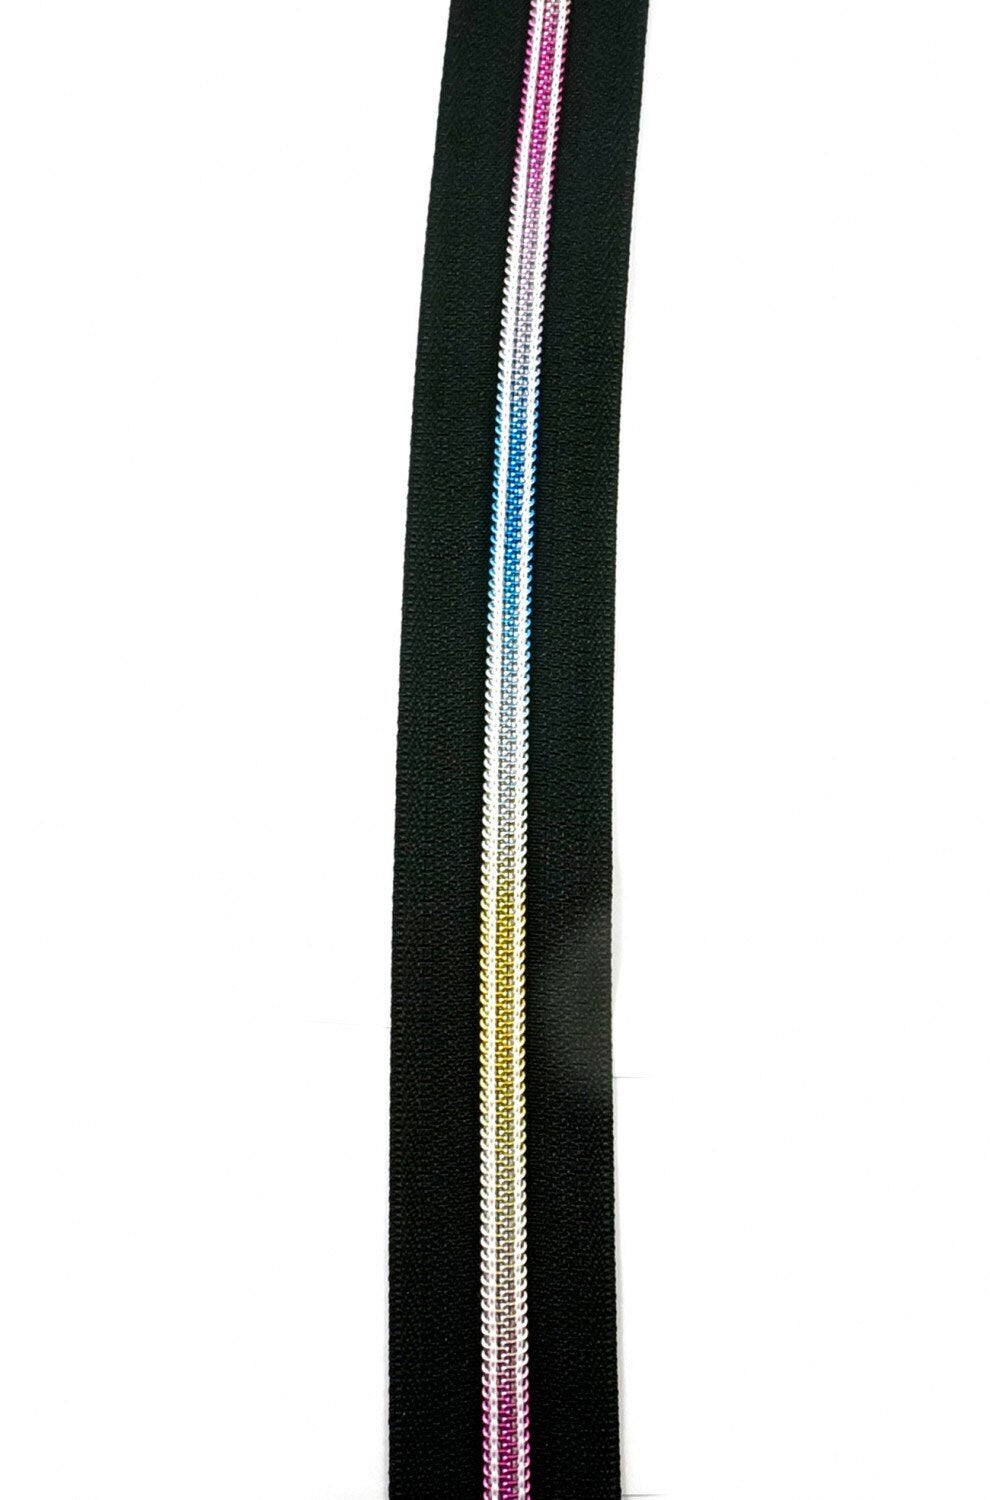 Black Rainbow Zipper By The Yard - Emmaline Bags  - Black Tape - Rainbow Nylon Teeth - 3 Yards - Zipper Pulls Available Separately